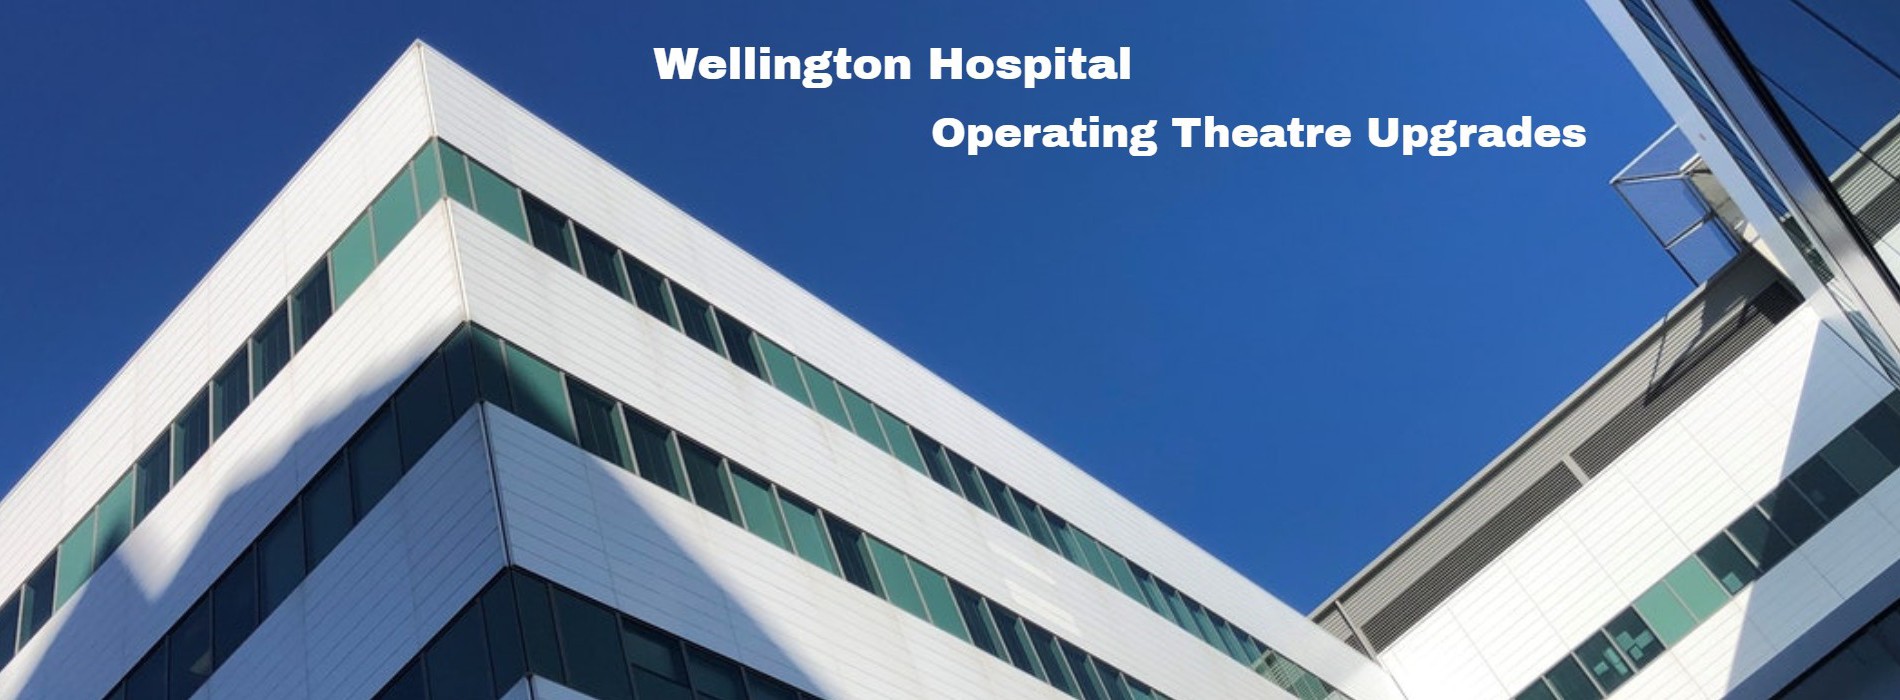 Wellington Hospital Upgrade2